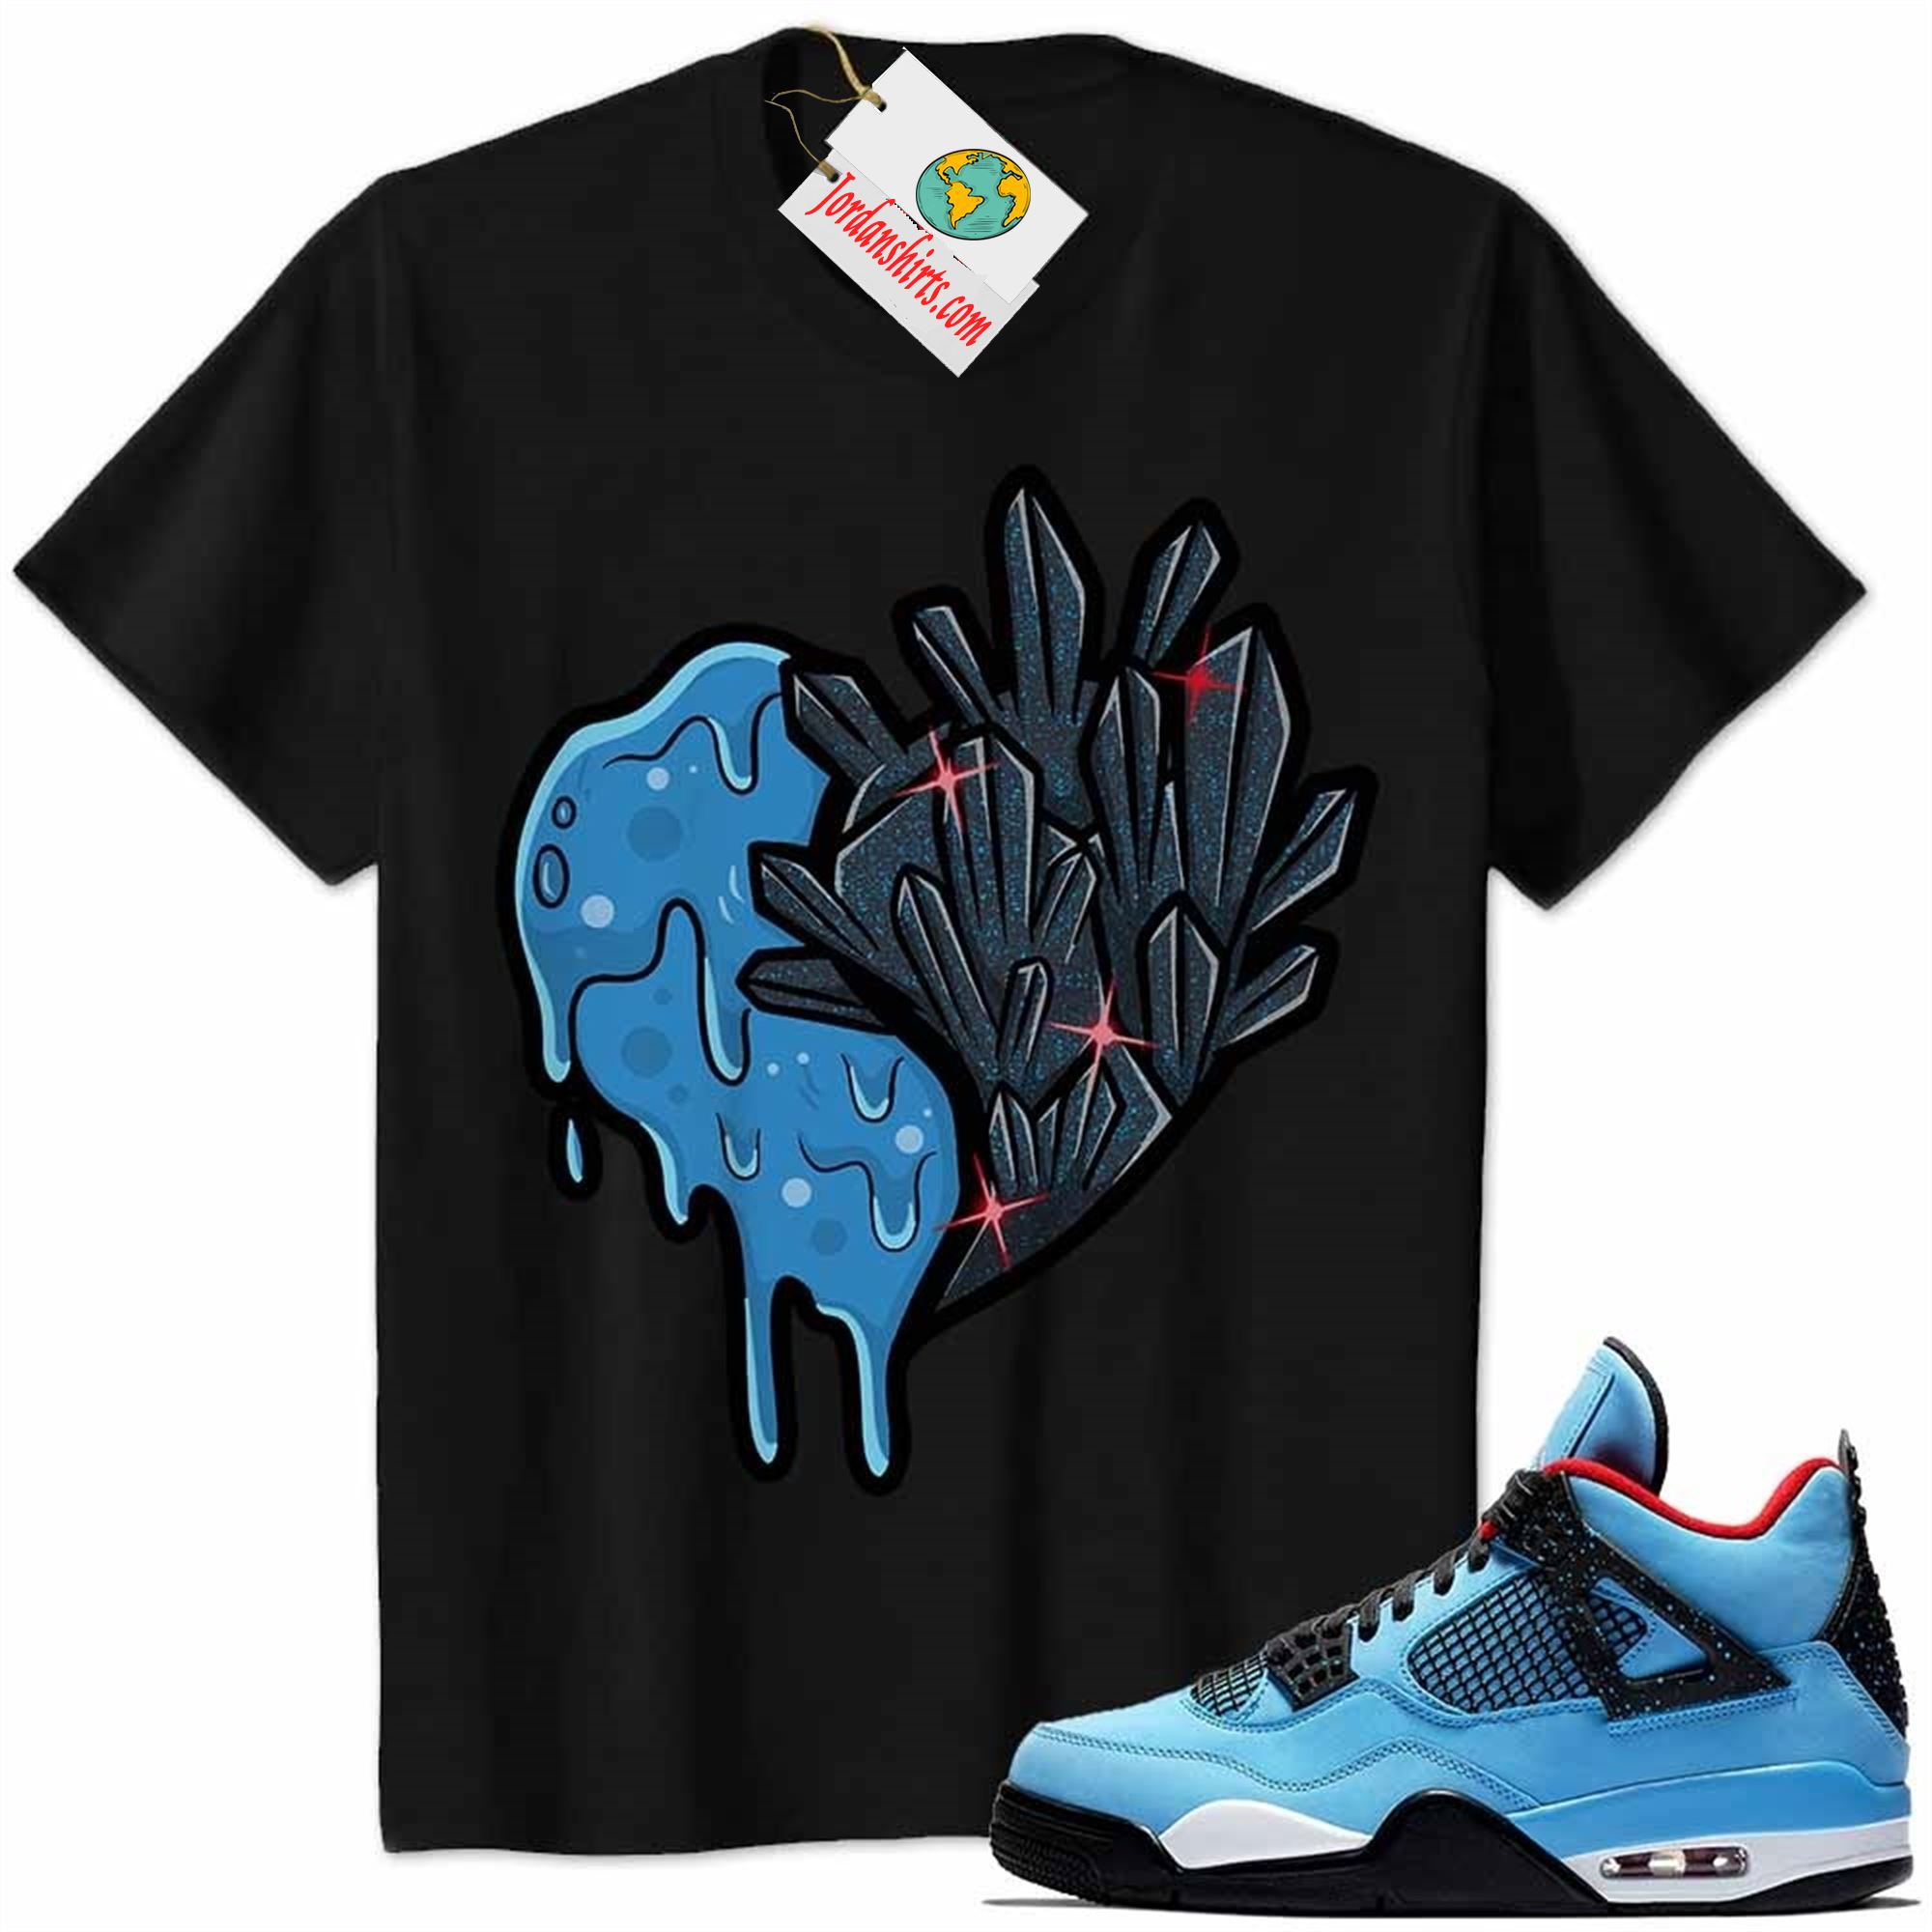 Jordan 4 Shirt, Crystal And Melt Heart Black Air Jordan 4 Cactus Jack Travis Scott 4s Size Up To 5xl